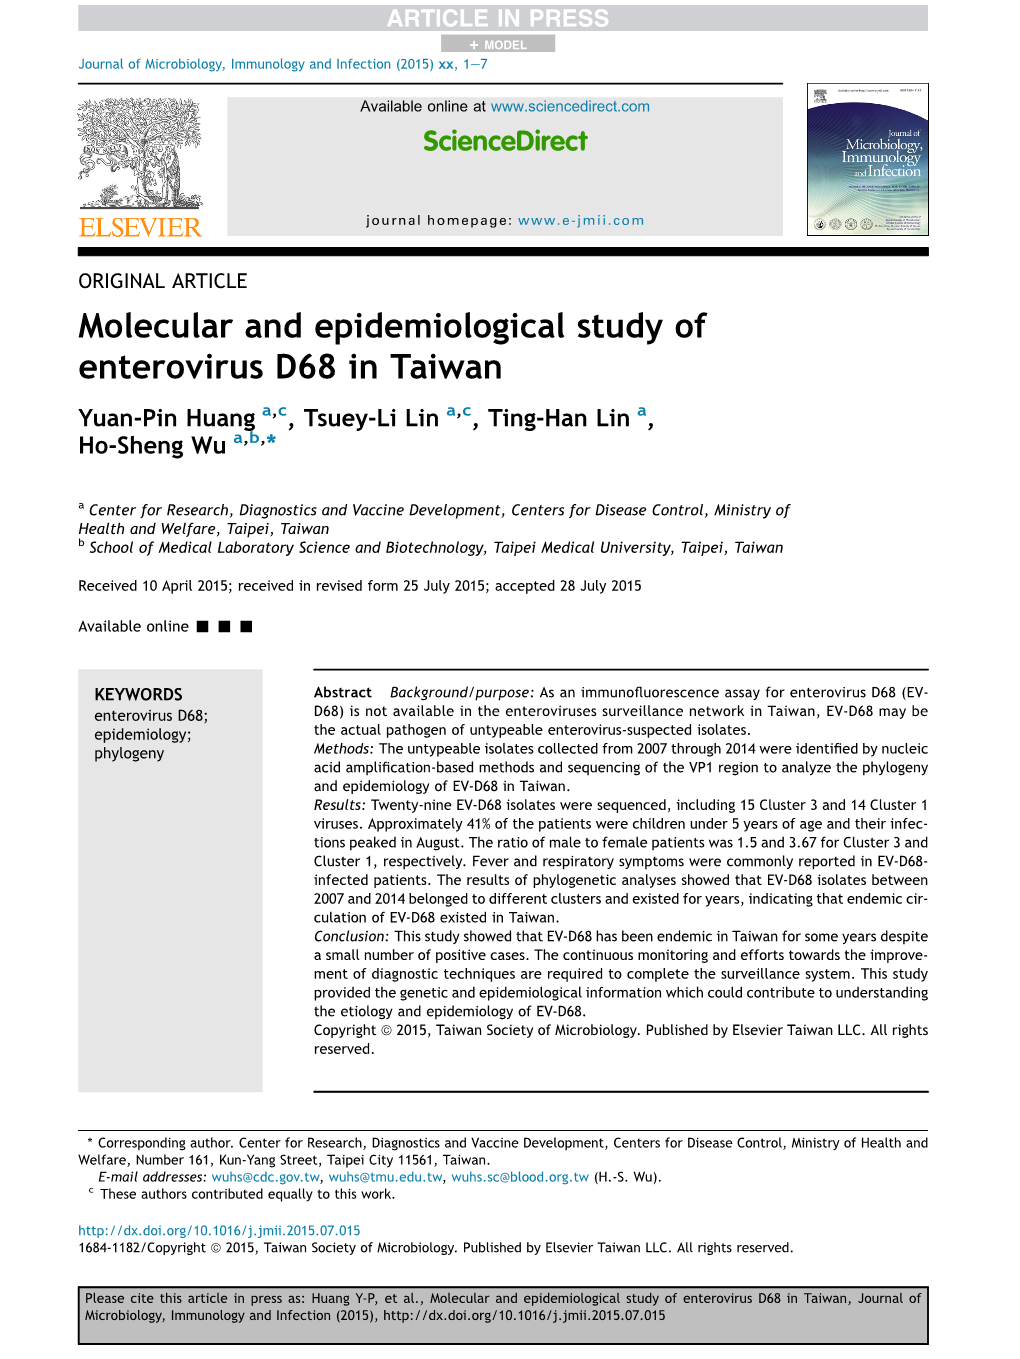 Molecular and Epidemiological Study of Enterovirus D68 in Taiwan